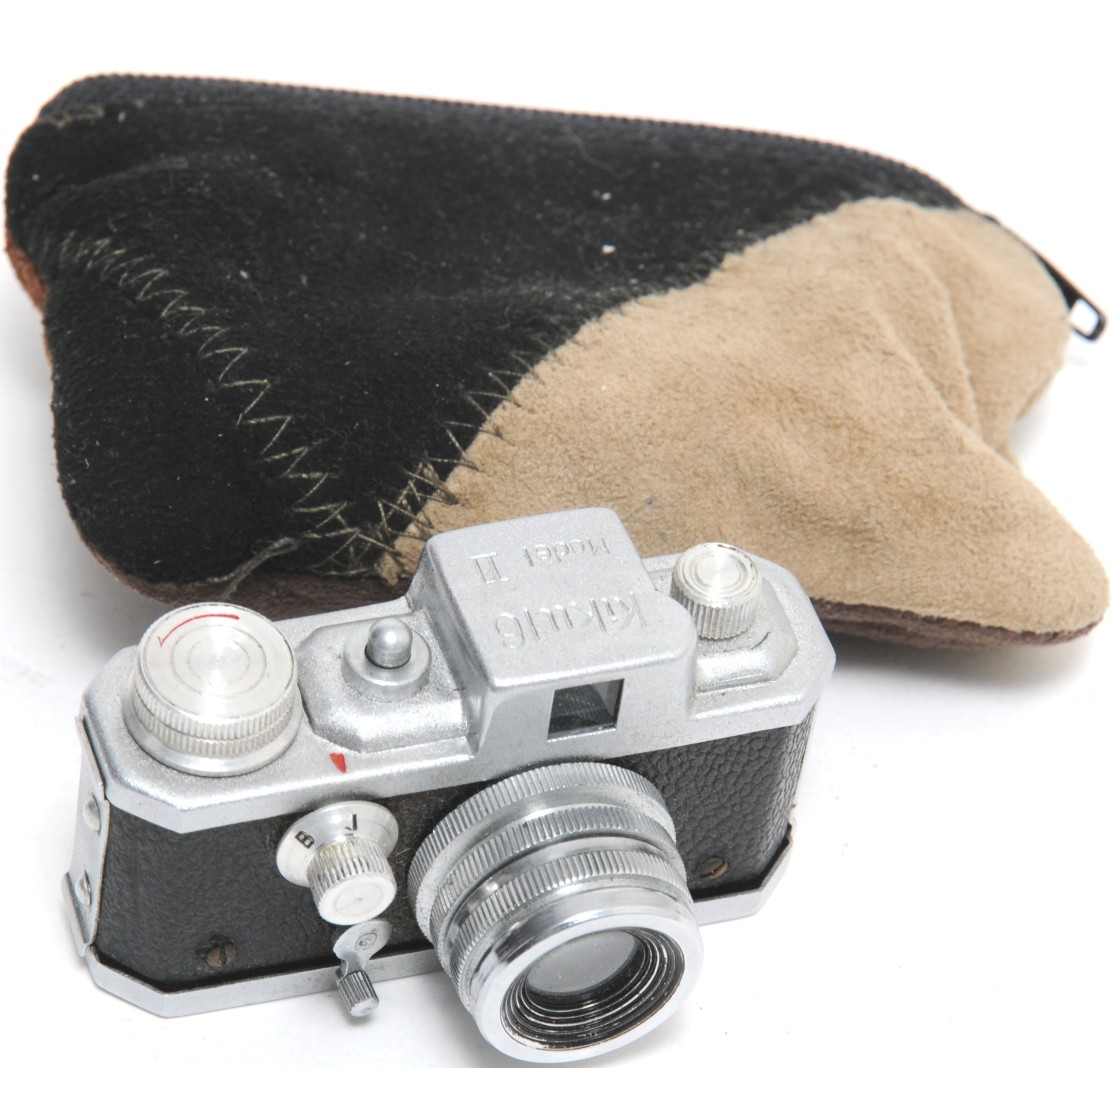 RARE Morita Kiku 16 Model II subminiature camera 14x14mm exposures on roll  film WORKING